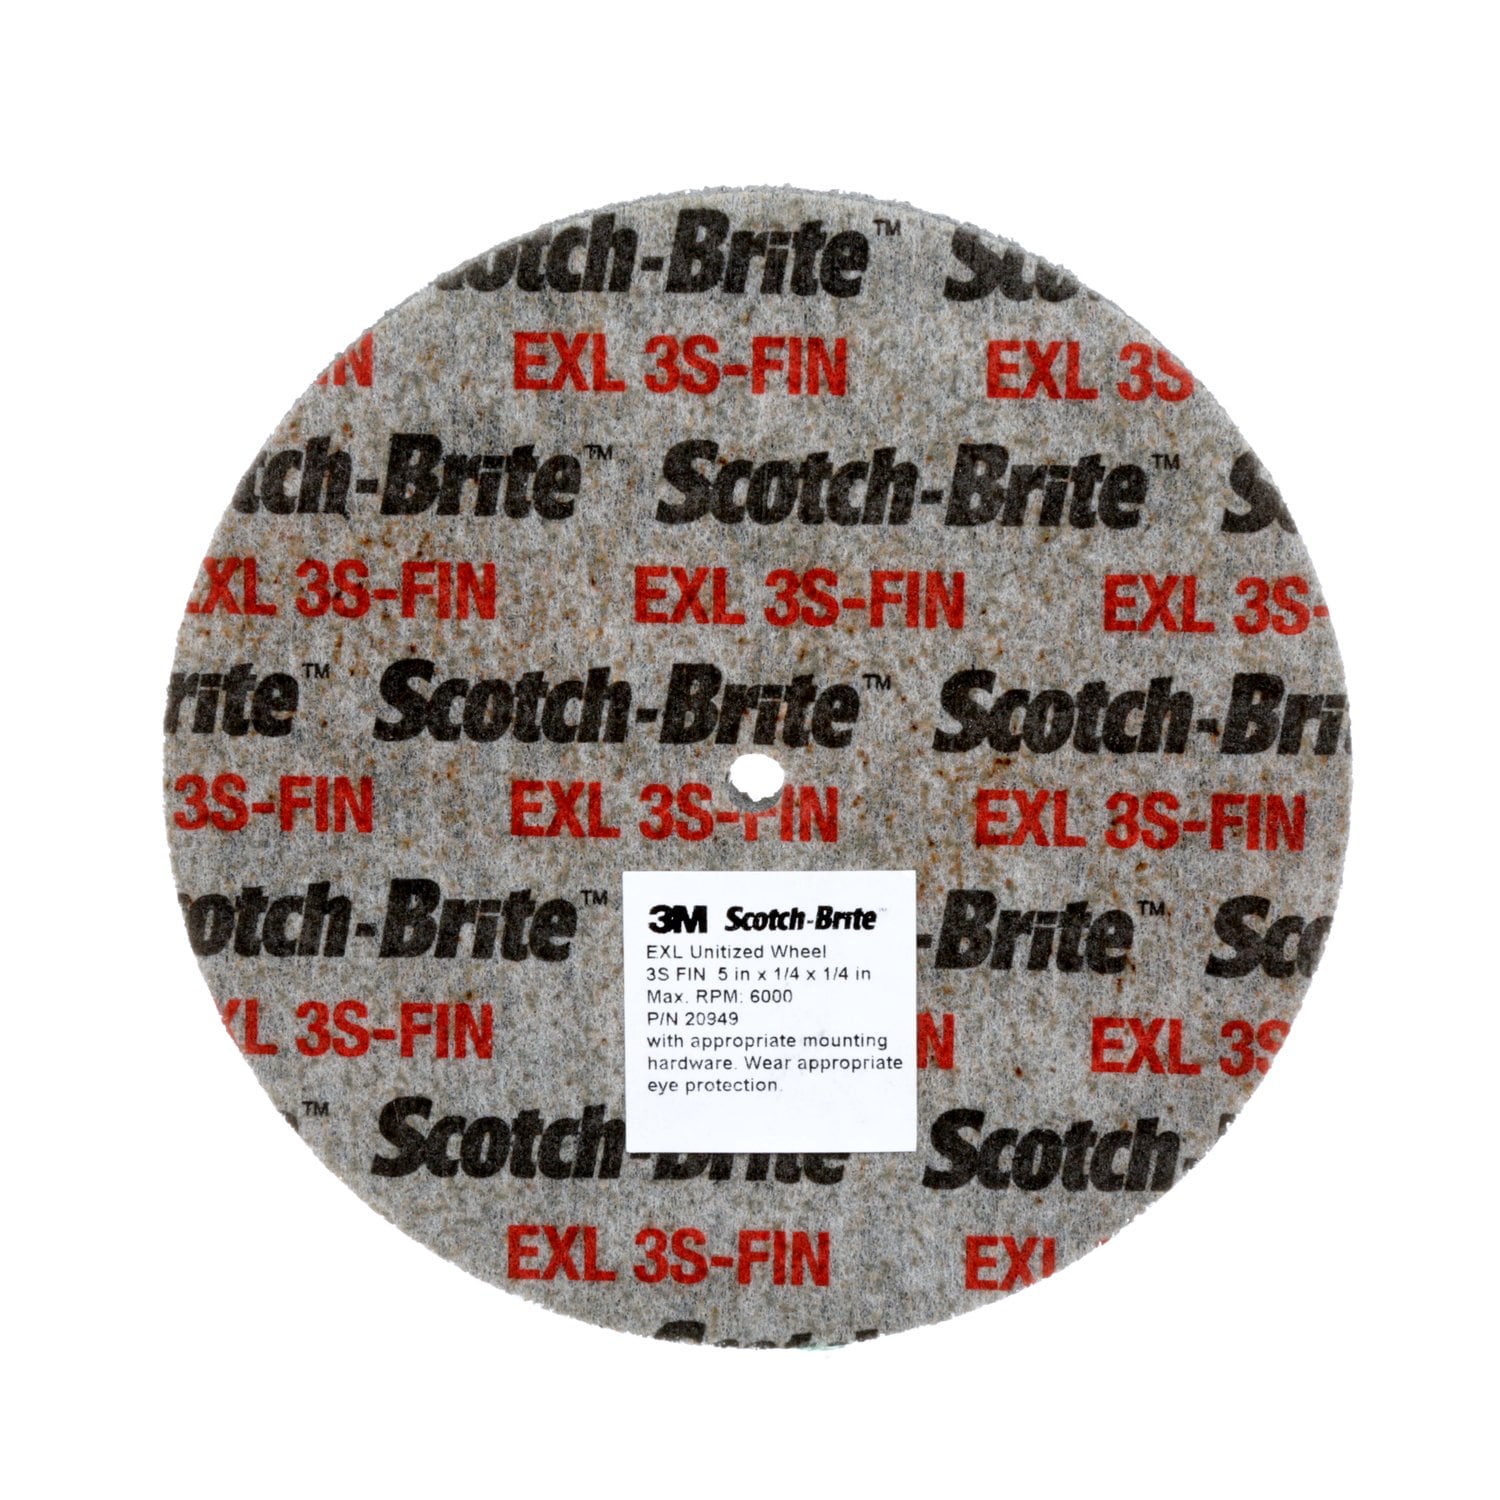 7010329052 - Scotch-Brite SST Unitized Wheel, 3 in x 1/4 in x 1/4 in 3S FIN, 40
ea/Case